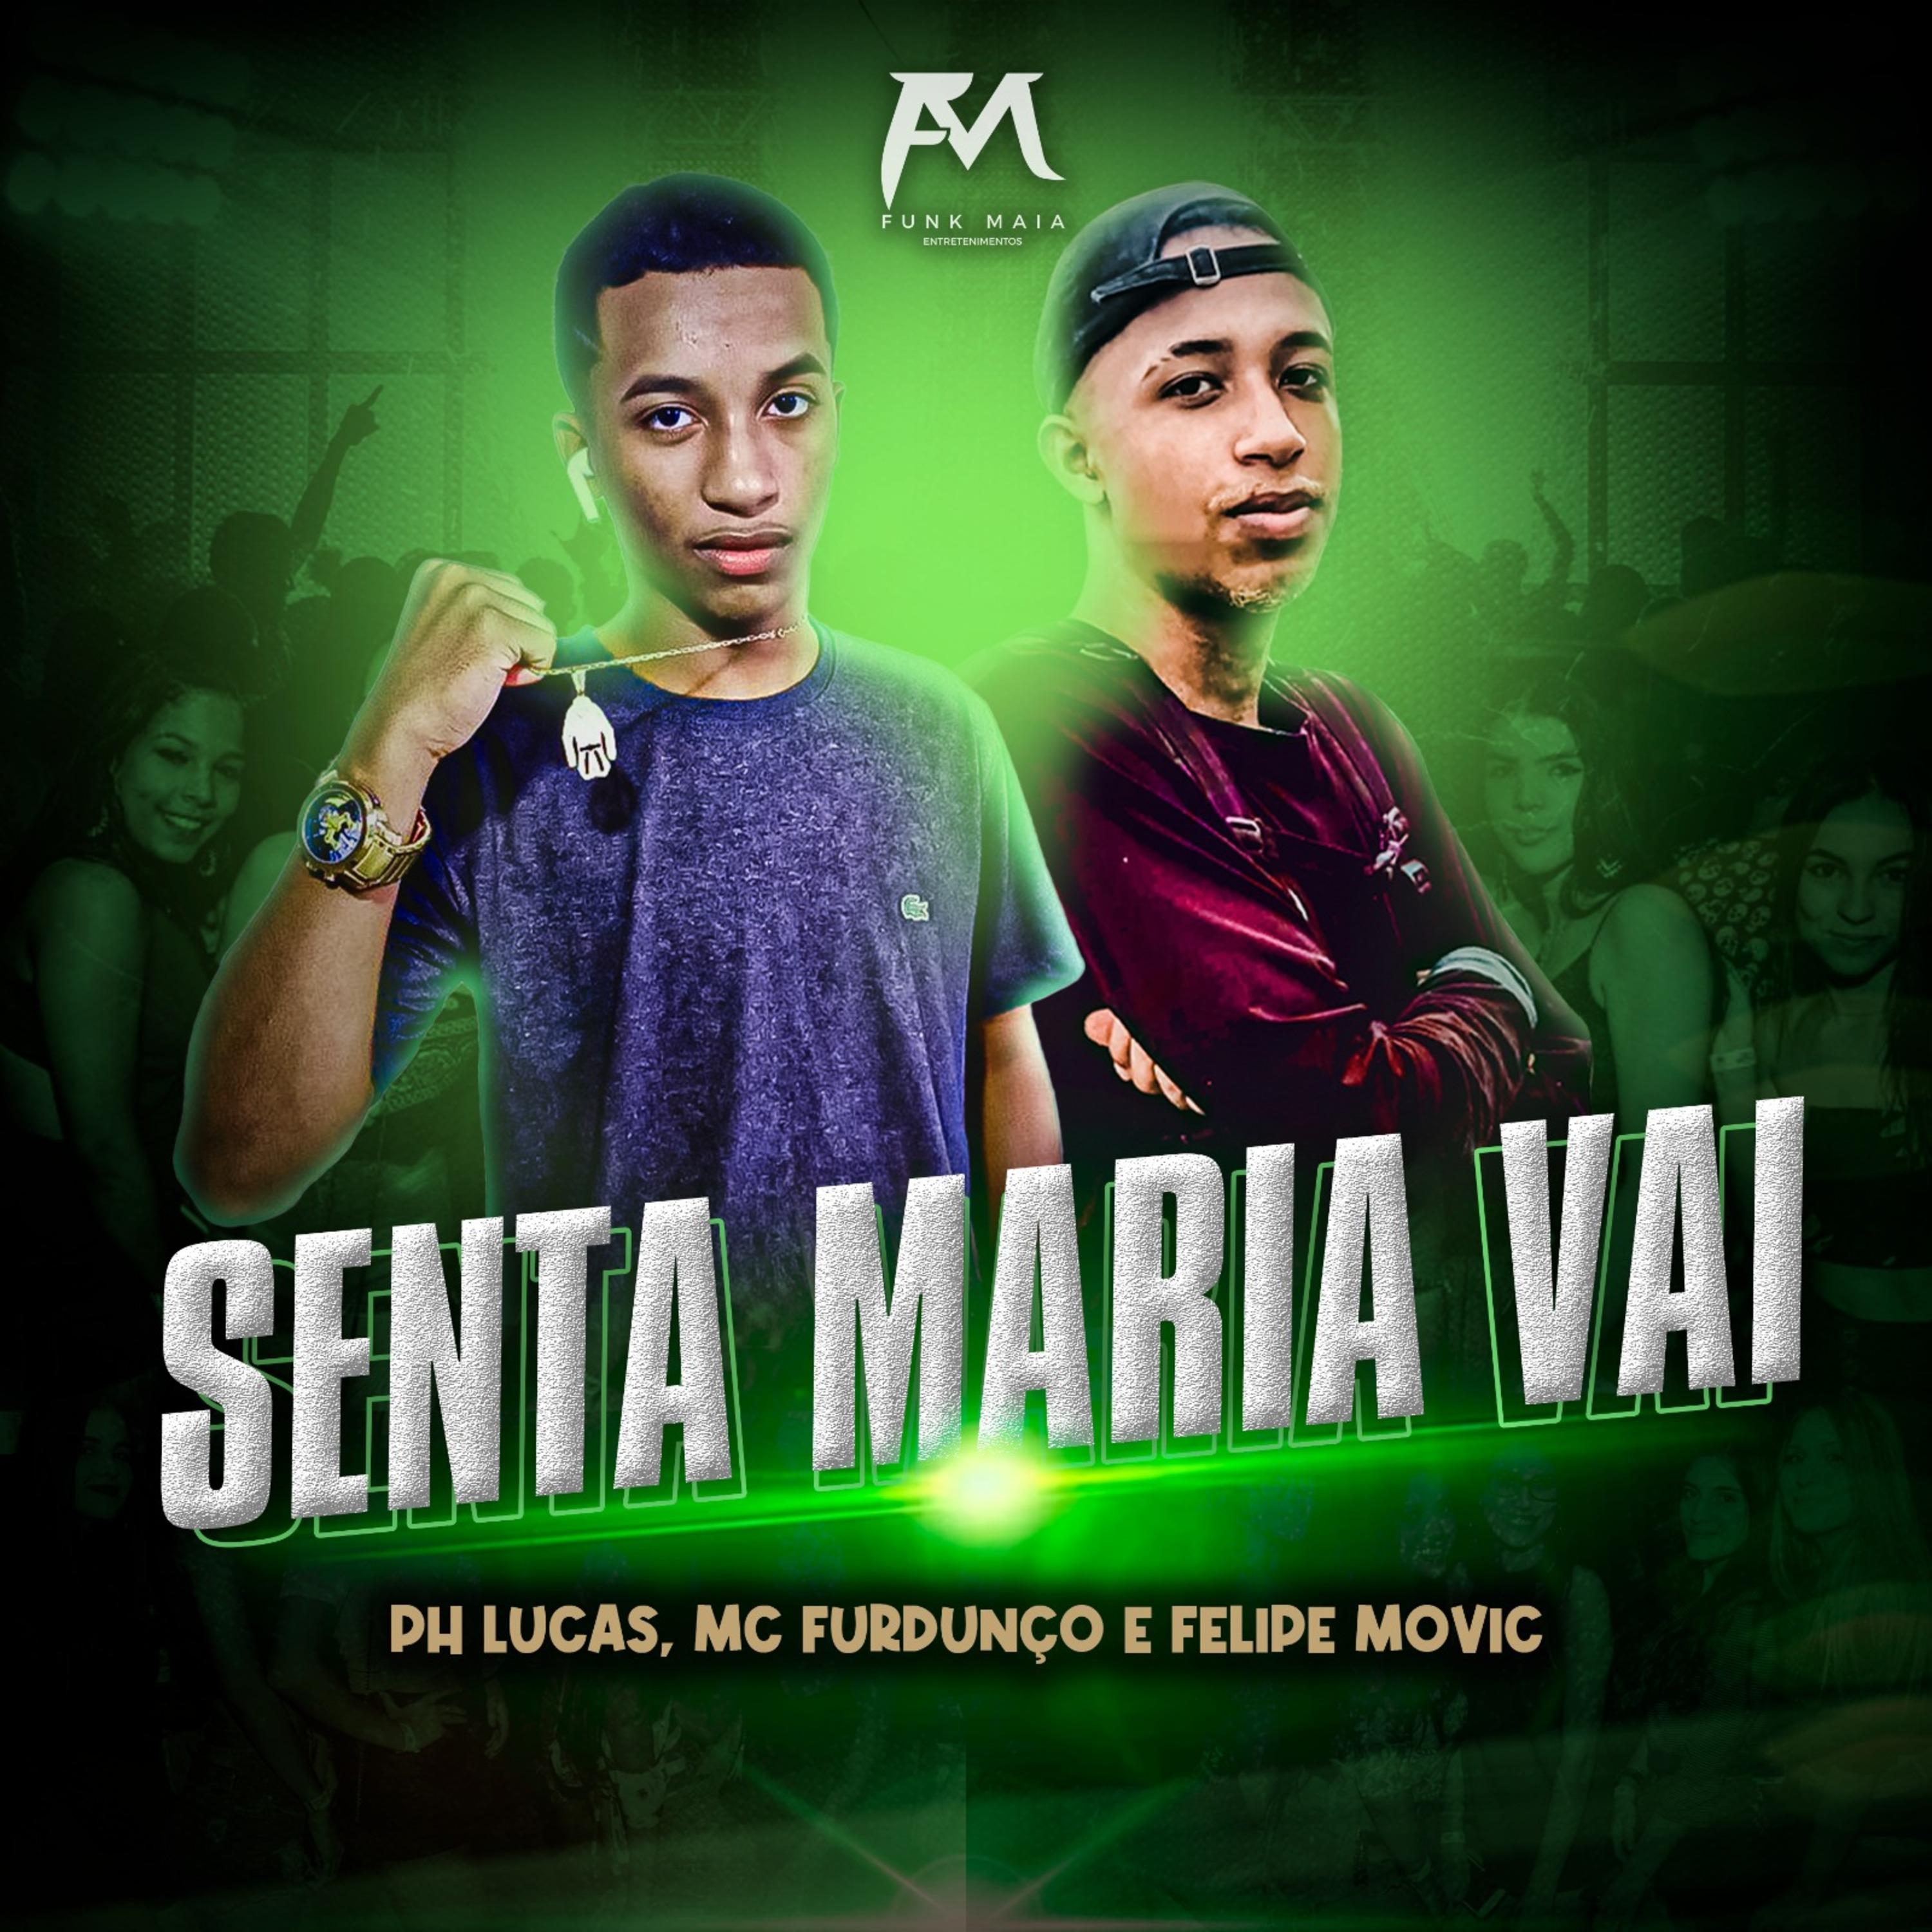 Постер альбома Senta Maria Vai